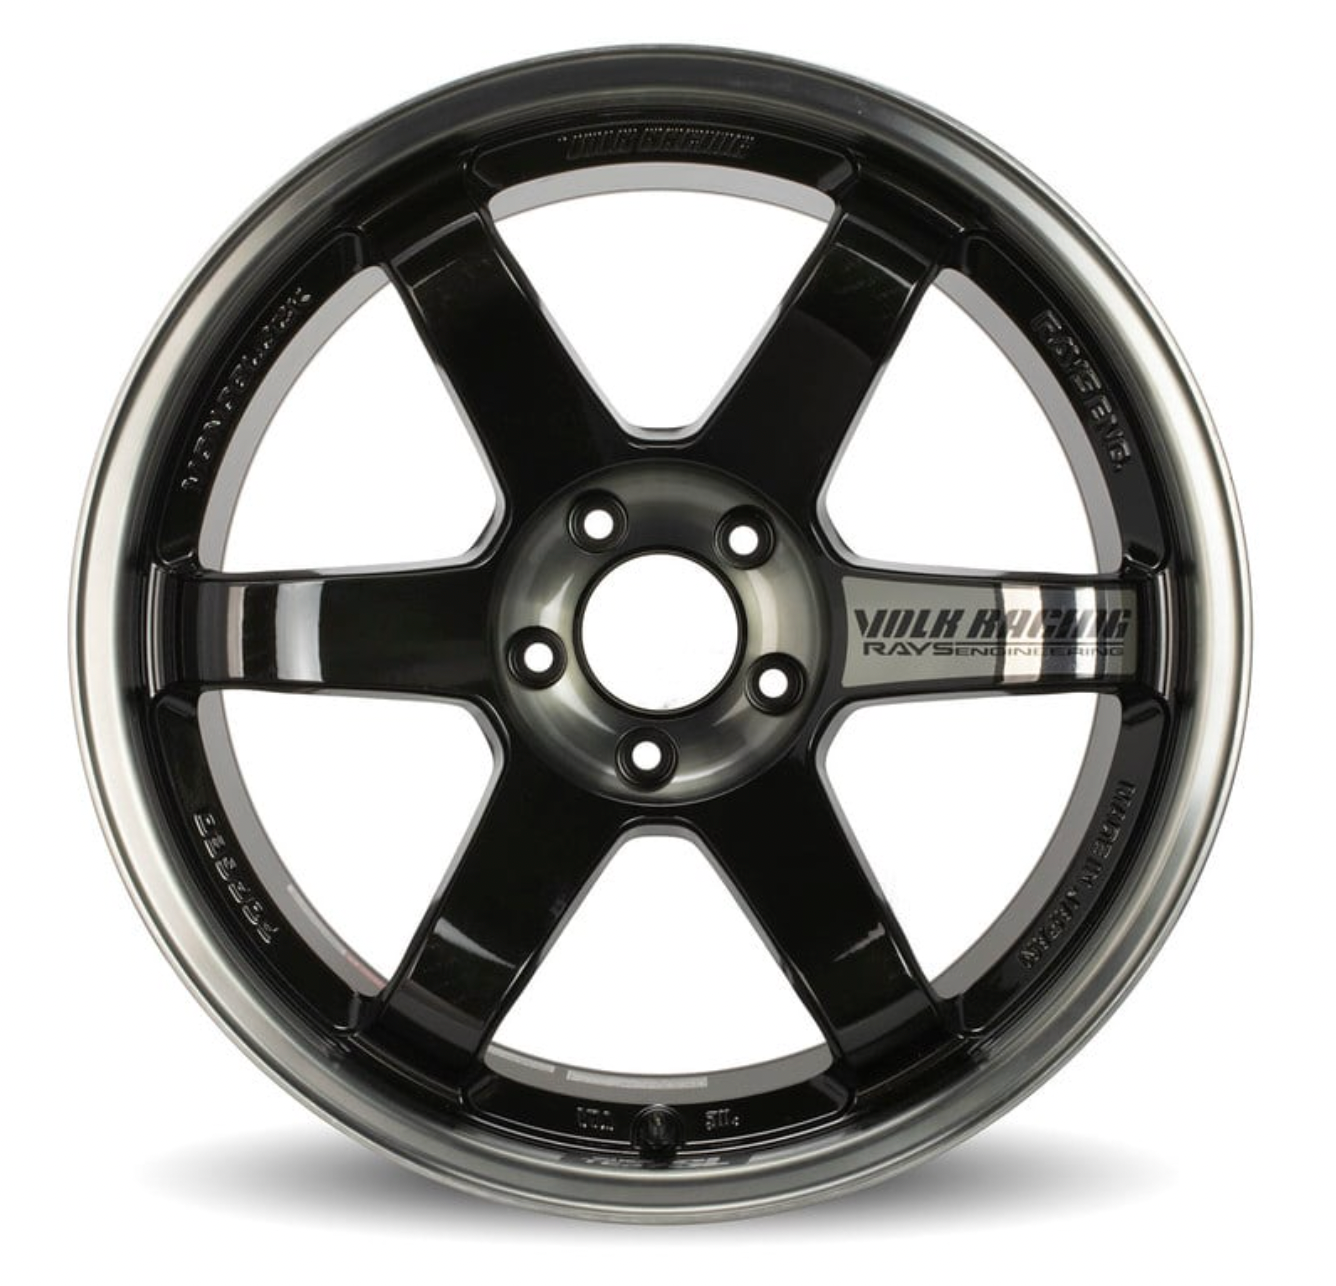 Volk Racing TE37 SL Pressed Double Black Wheel Set in 18x9.5 +38 5x120 (2017+ Civic Type R)